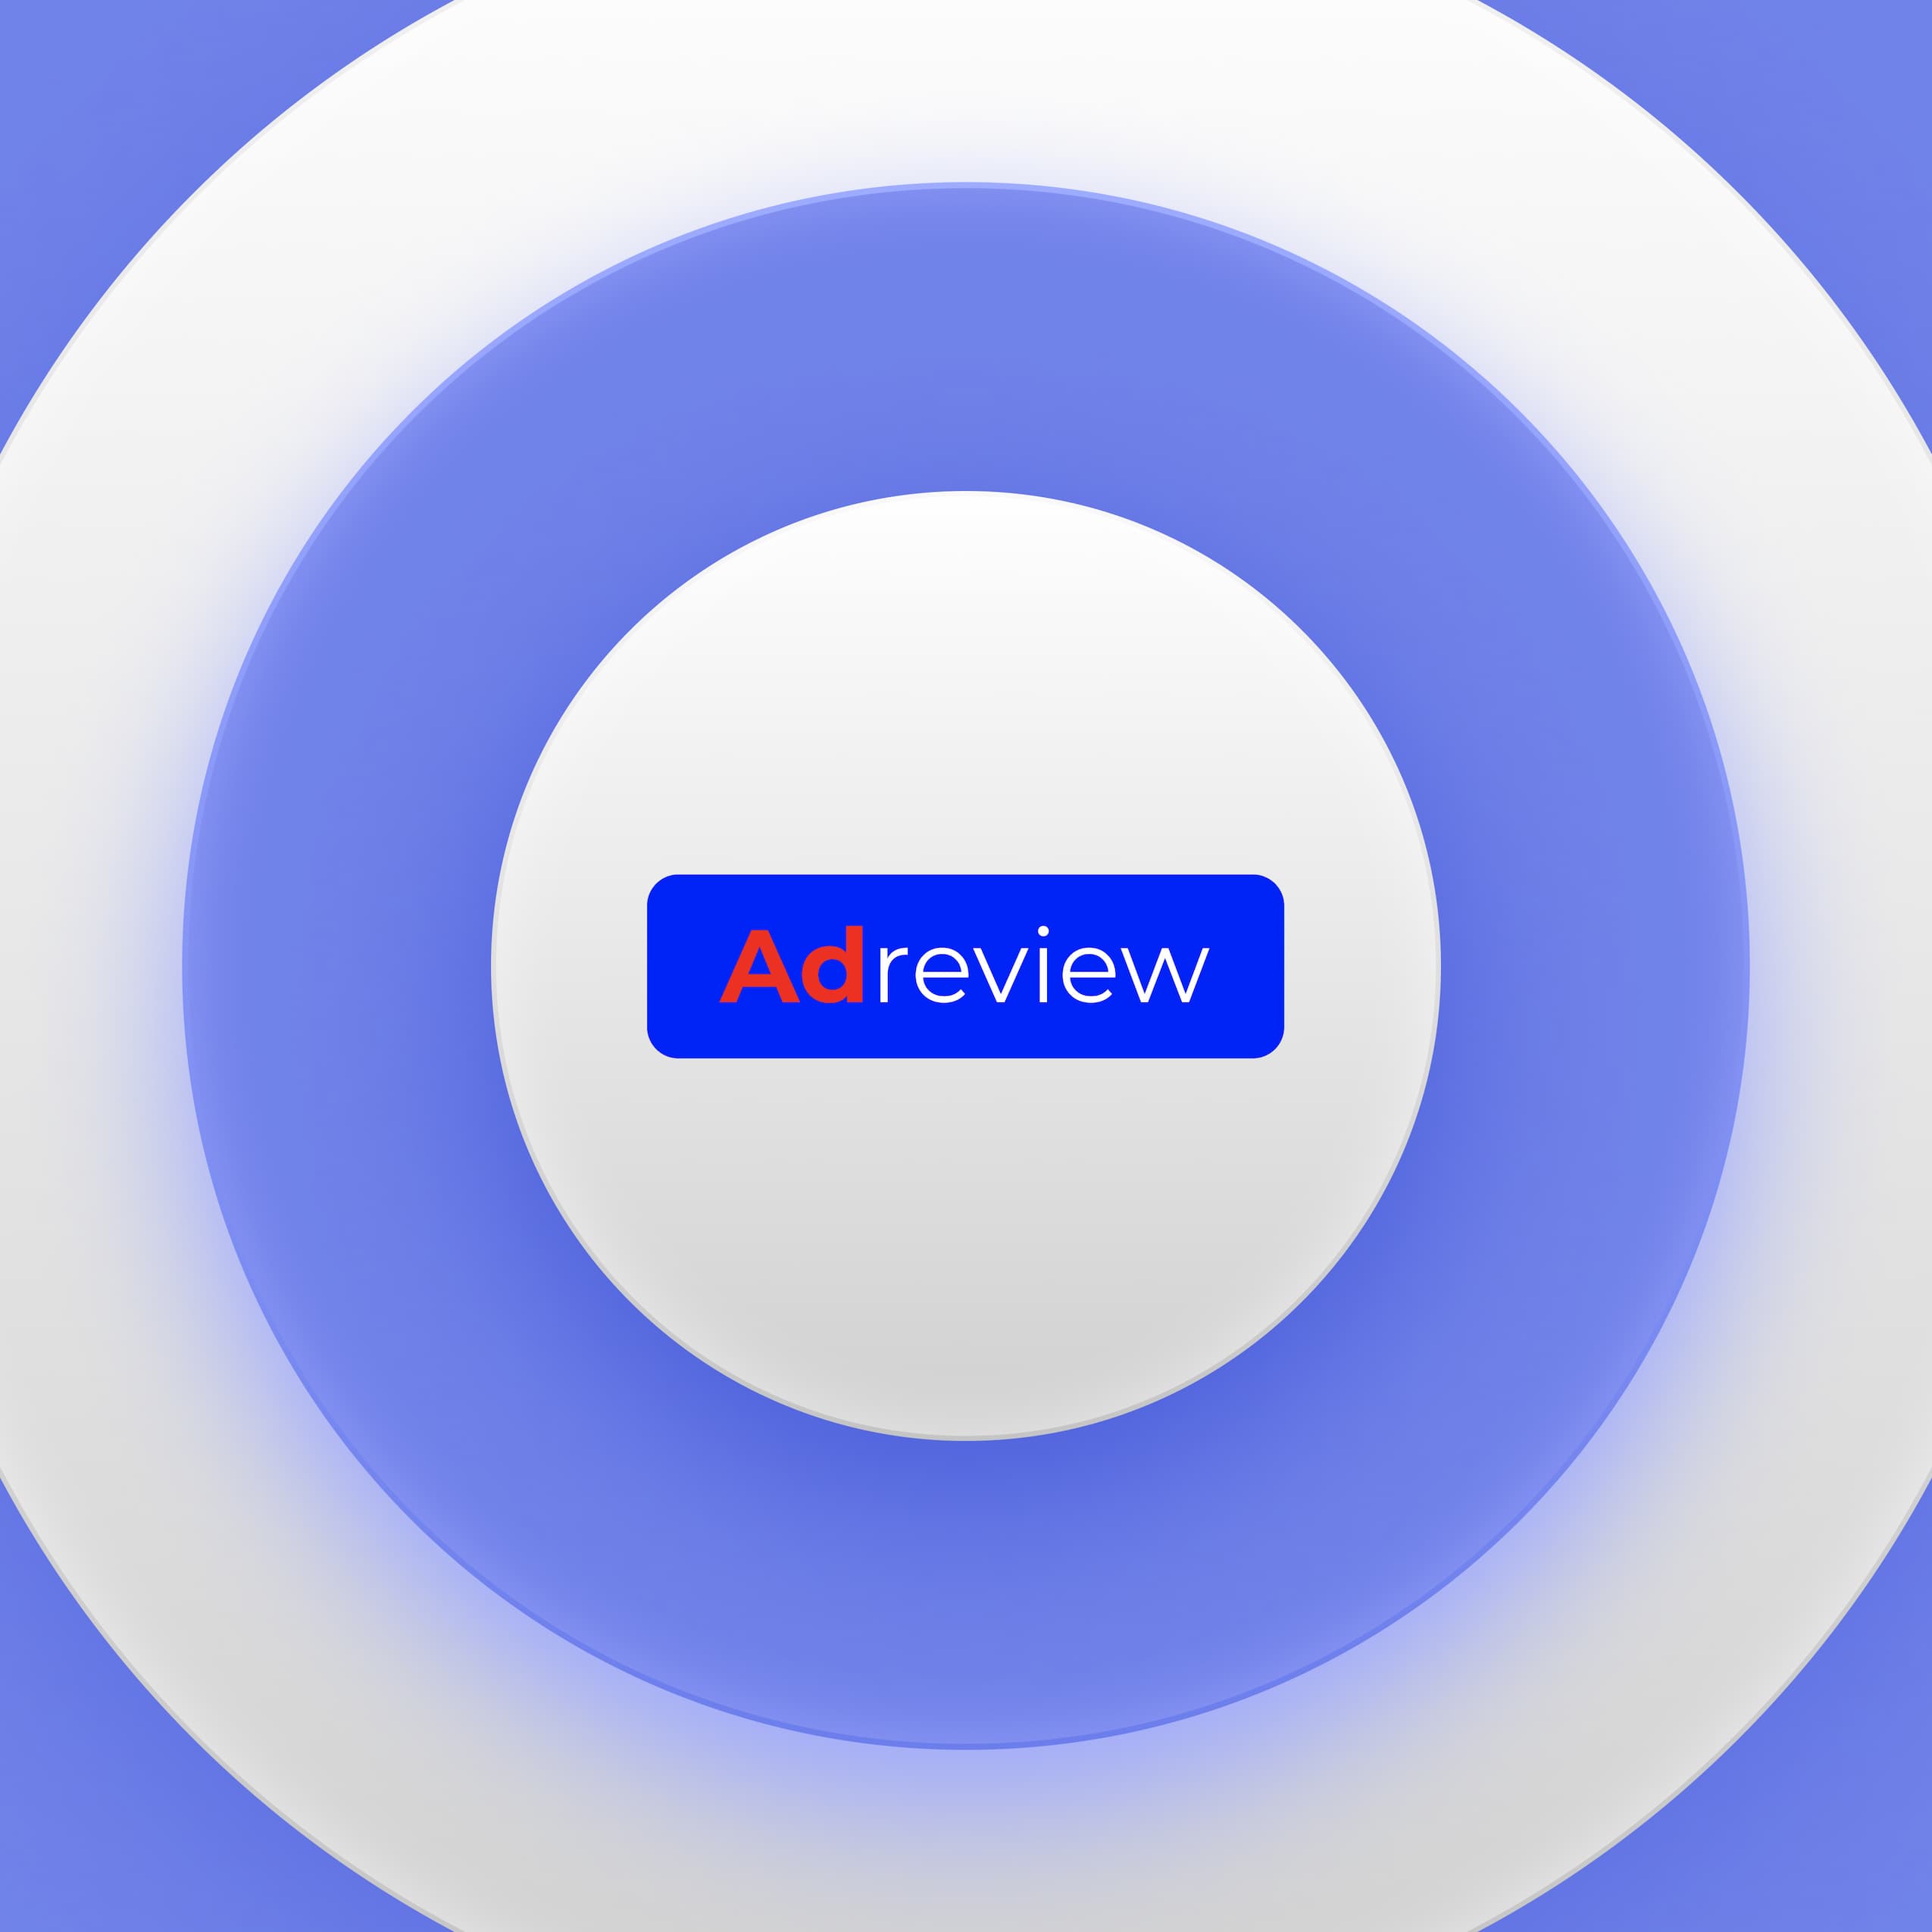 MarTech-система Adreview на основе компьютерного зрения